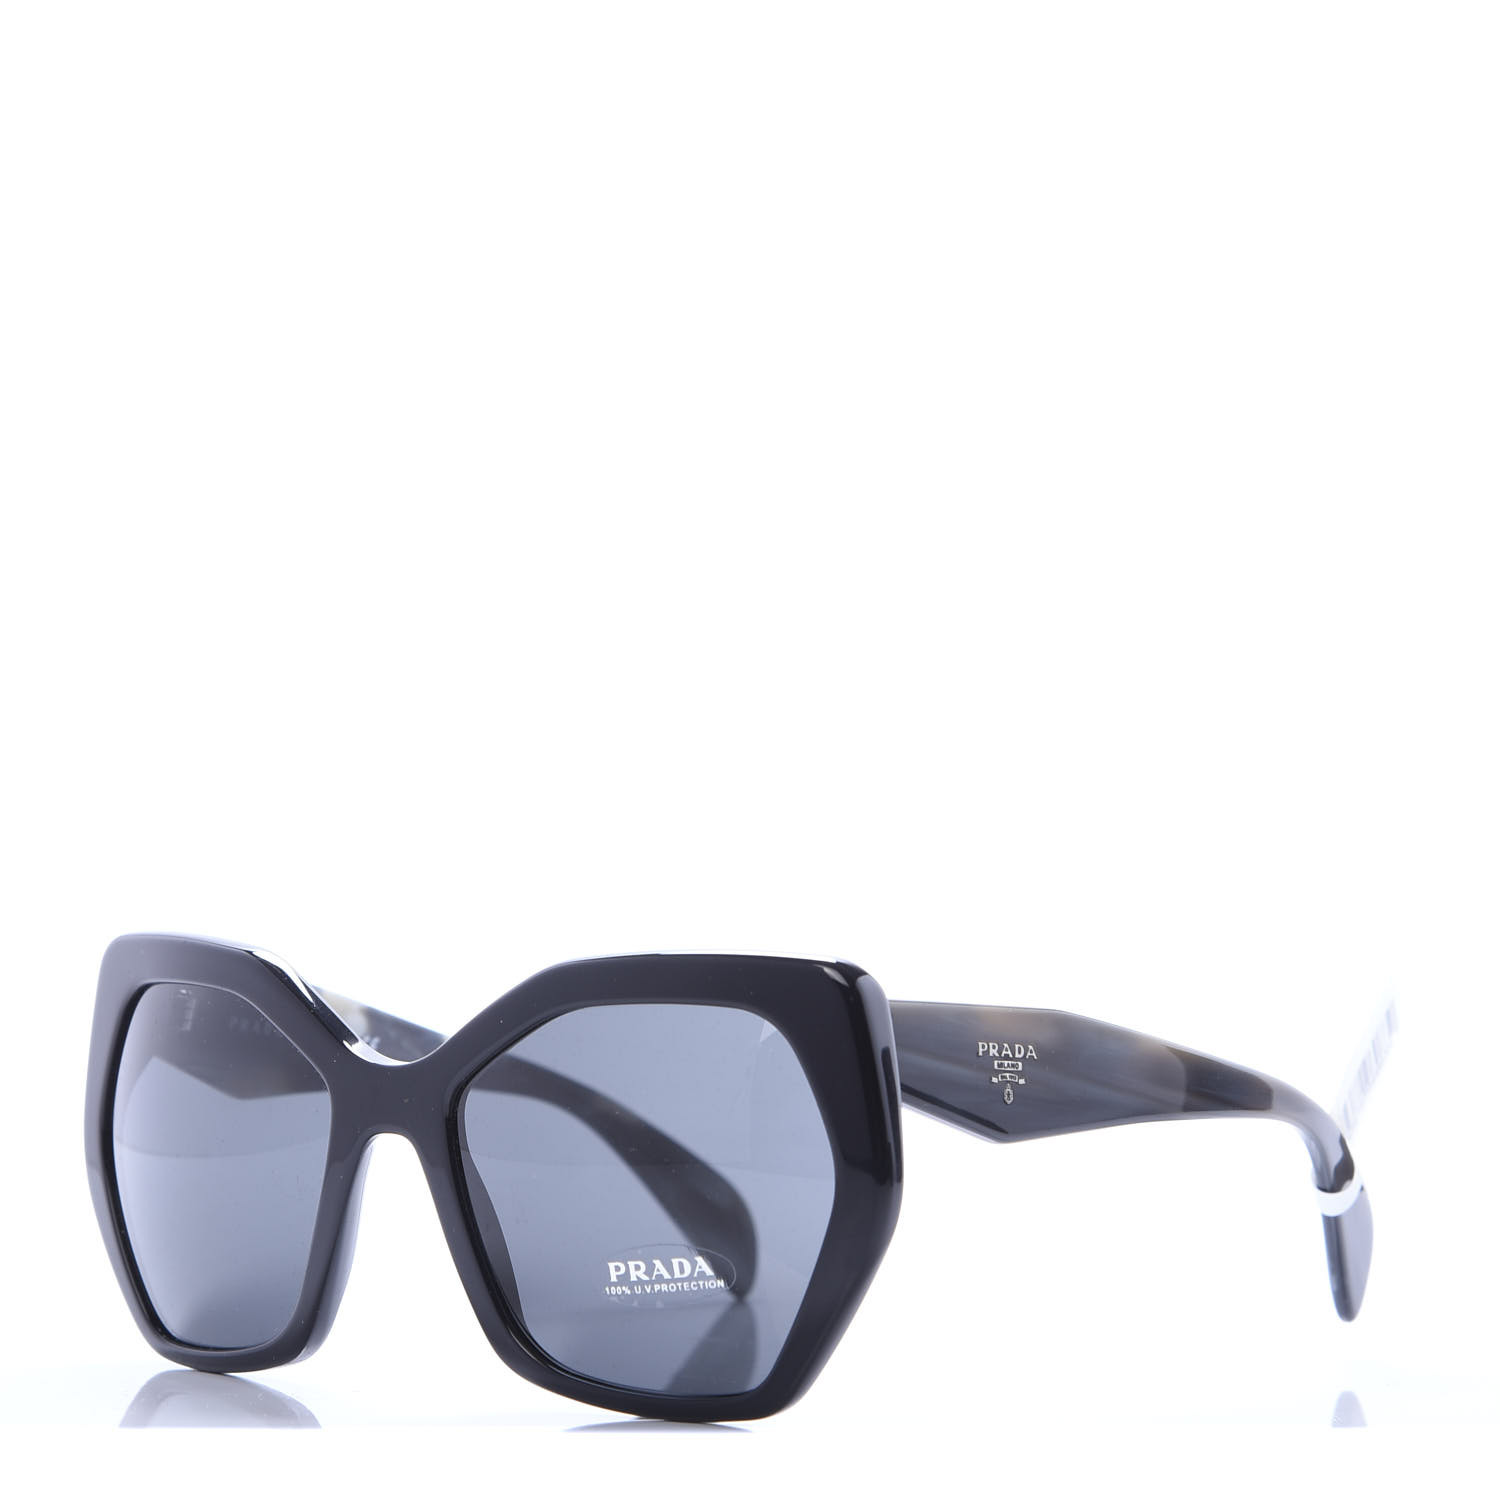 PRADA Sunglasses SPR 16R Black 632555 